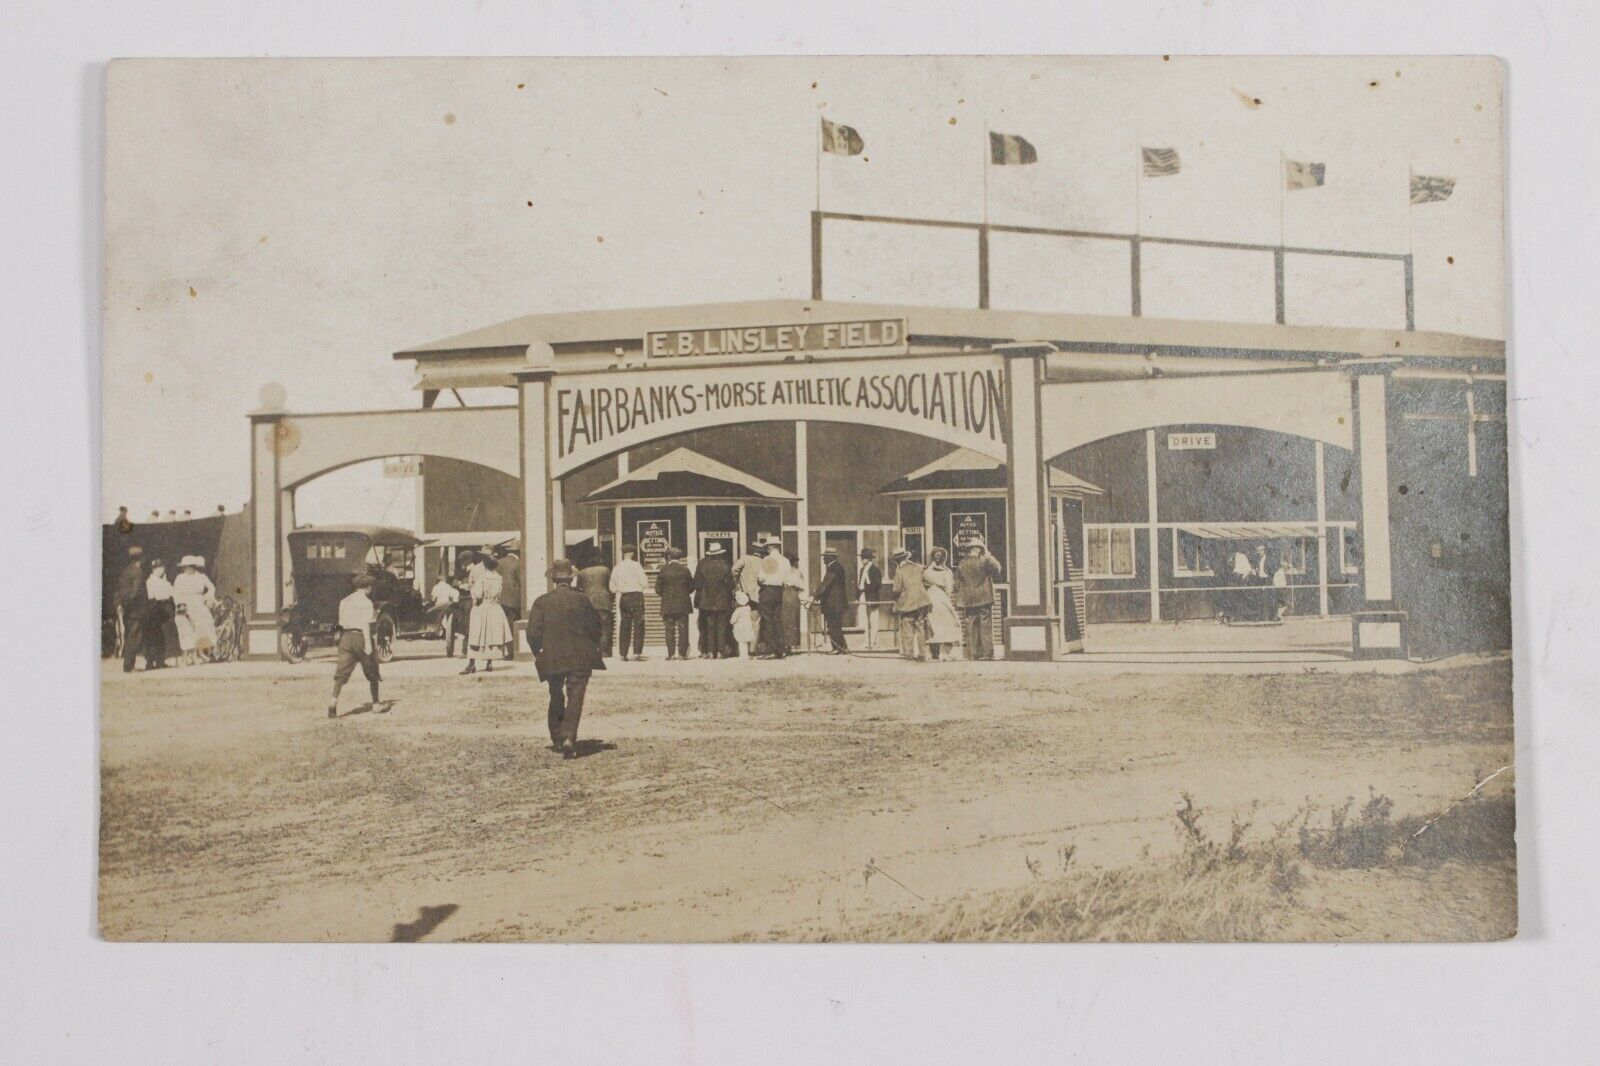 E.B. Linsley Field Fairbanks-Morse Baseball Stadium Postcard RPPC c. 1920s